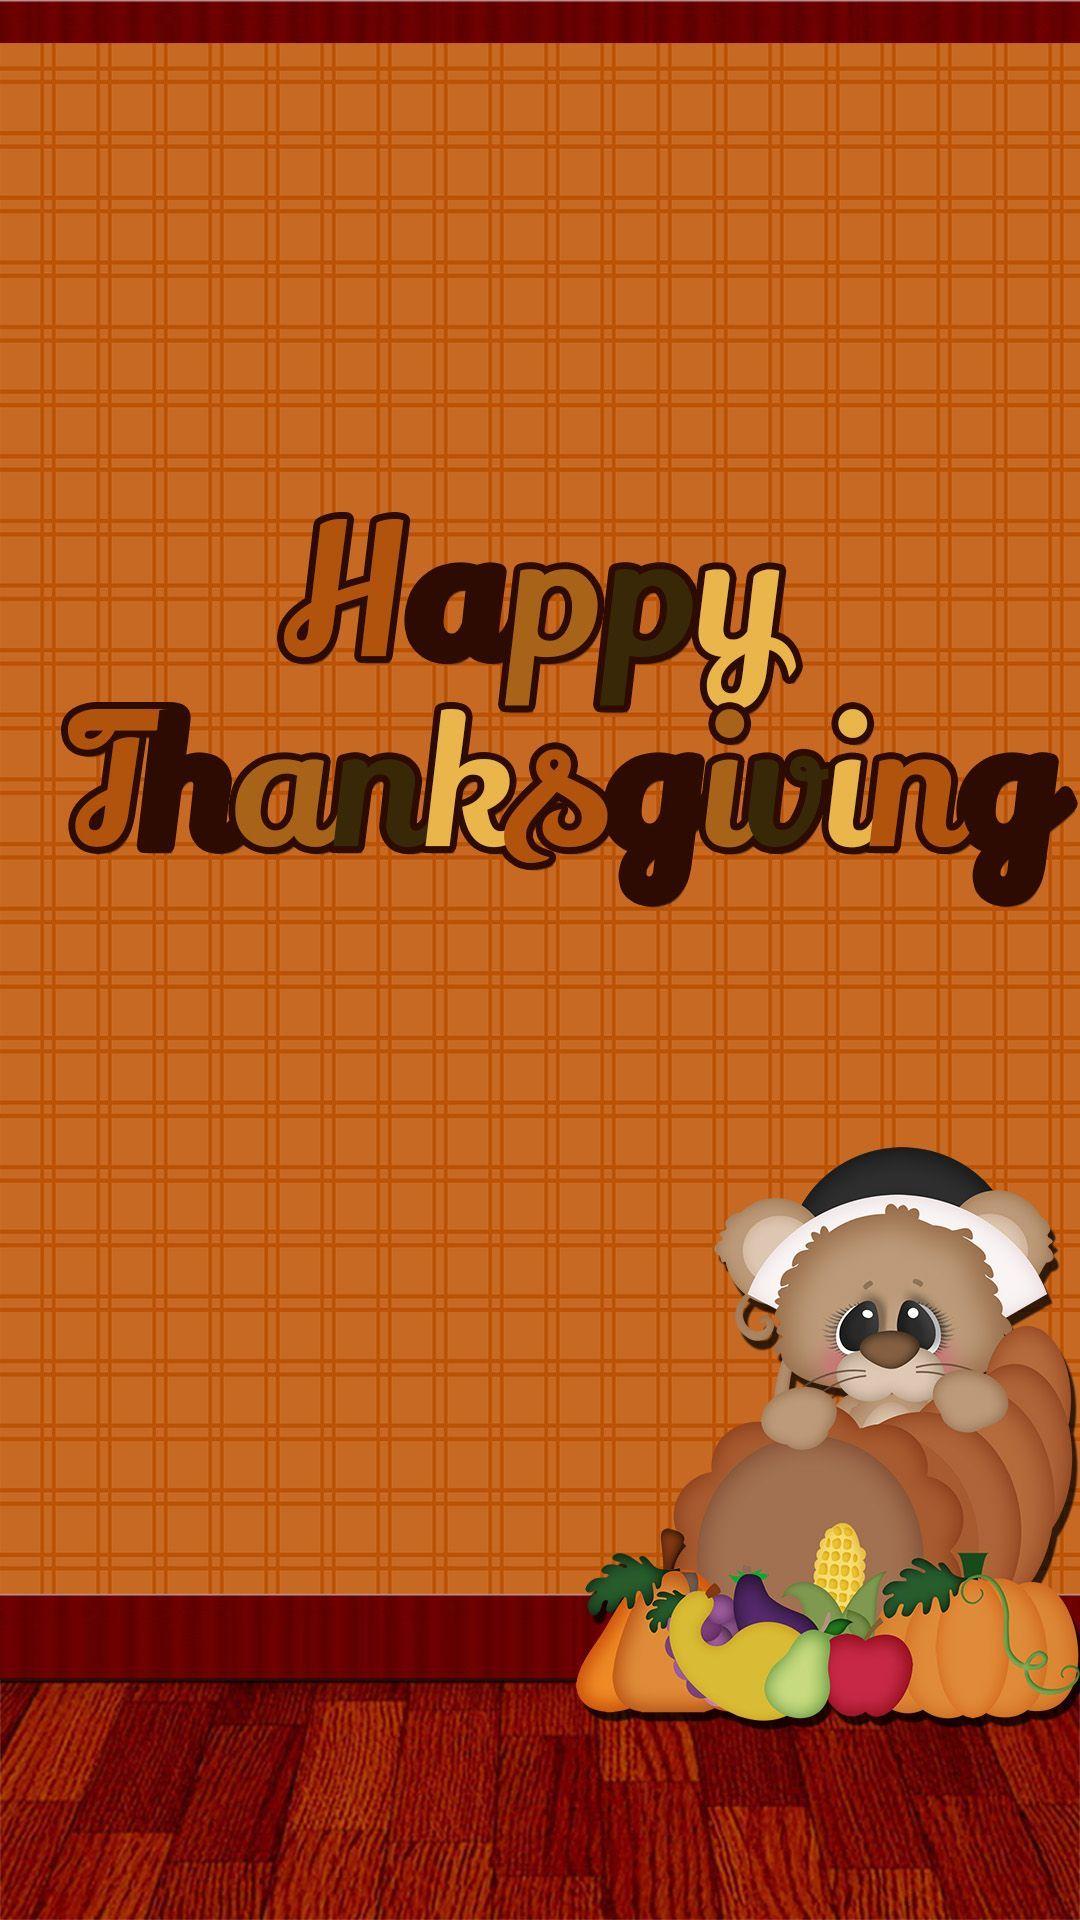 1080x1920 iPhone Wallpaper - Thanksgiving tjn. iPhone Walls: Thanksgiving